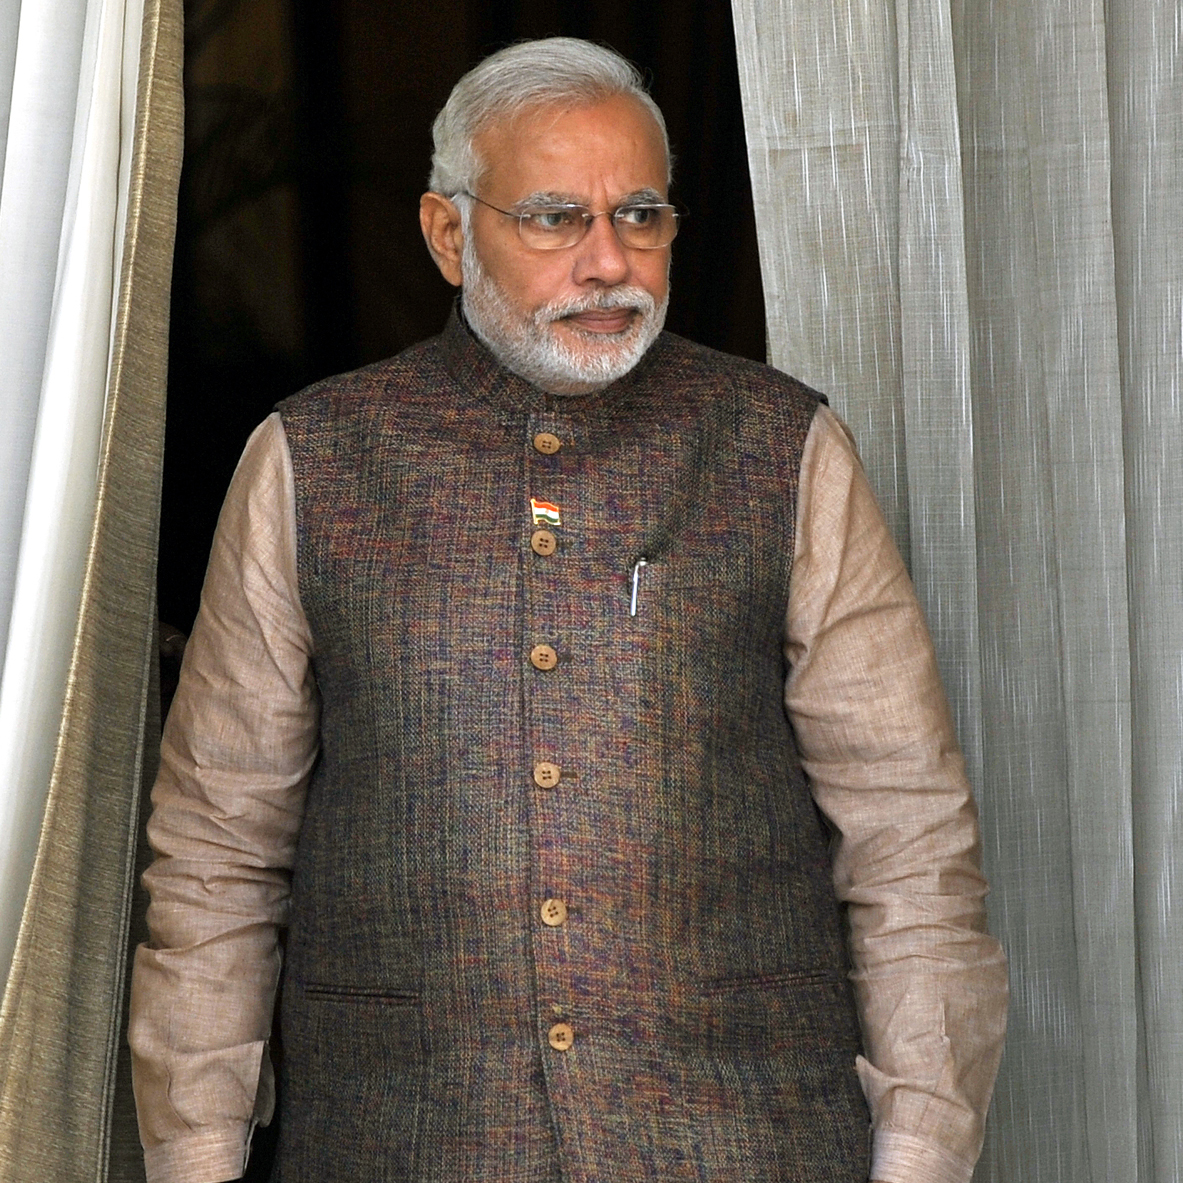 PM Narendra Modi's educational policies may promote Hindu right-wing